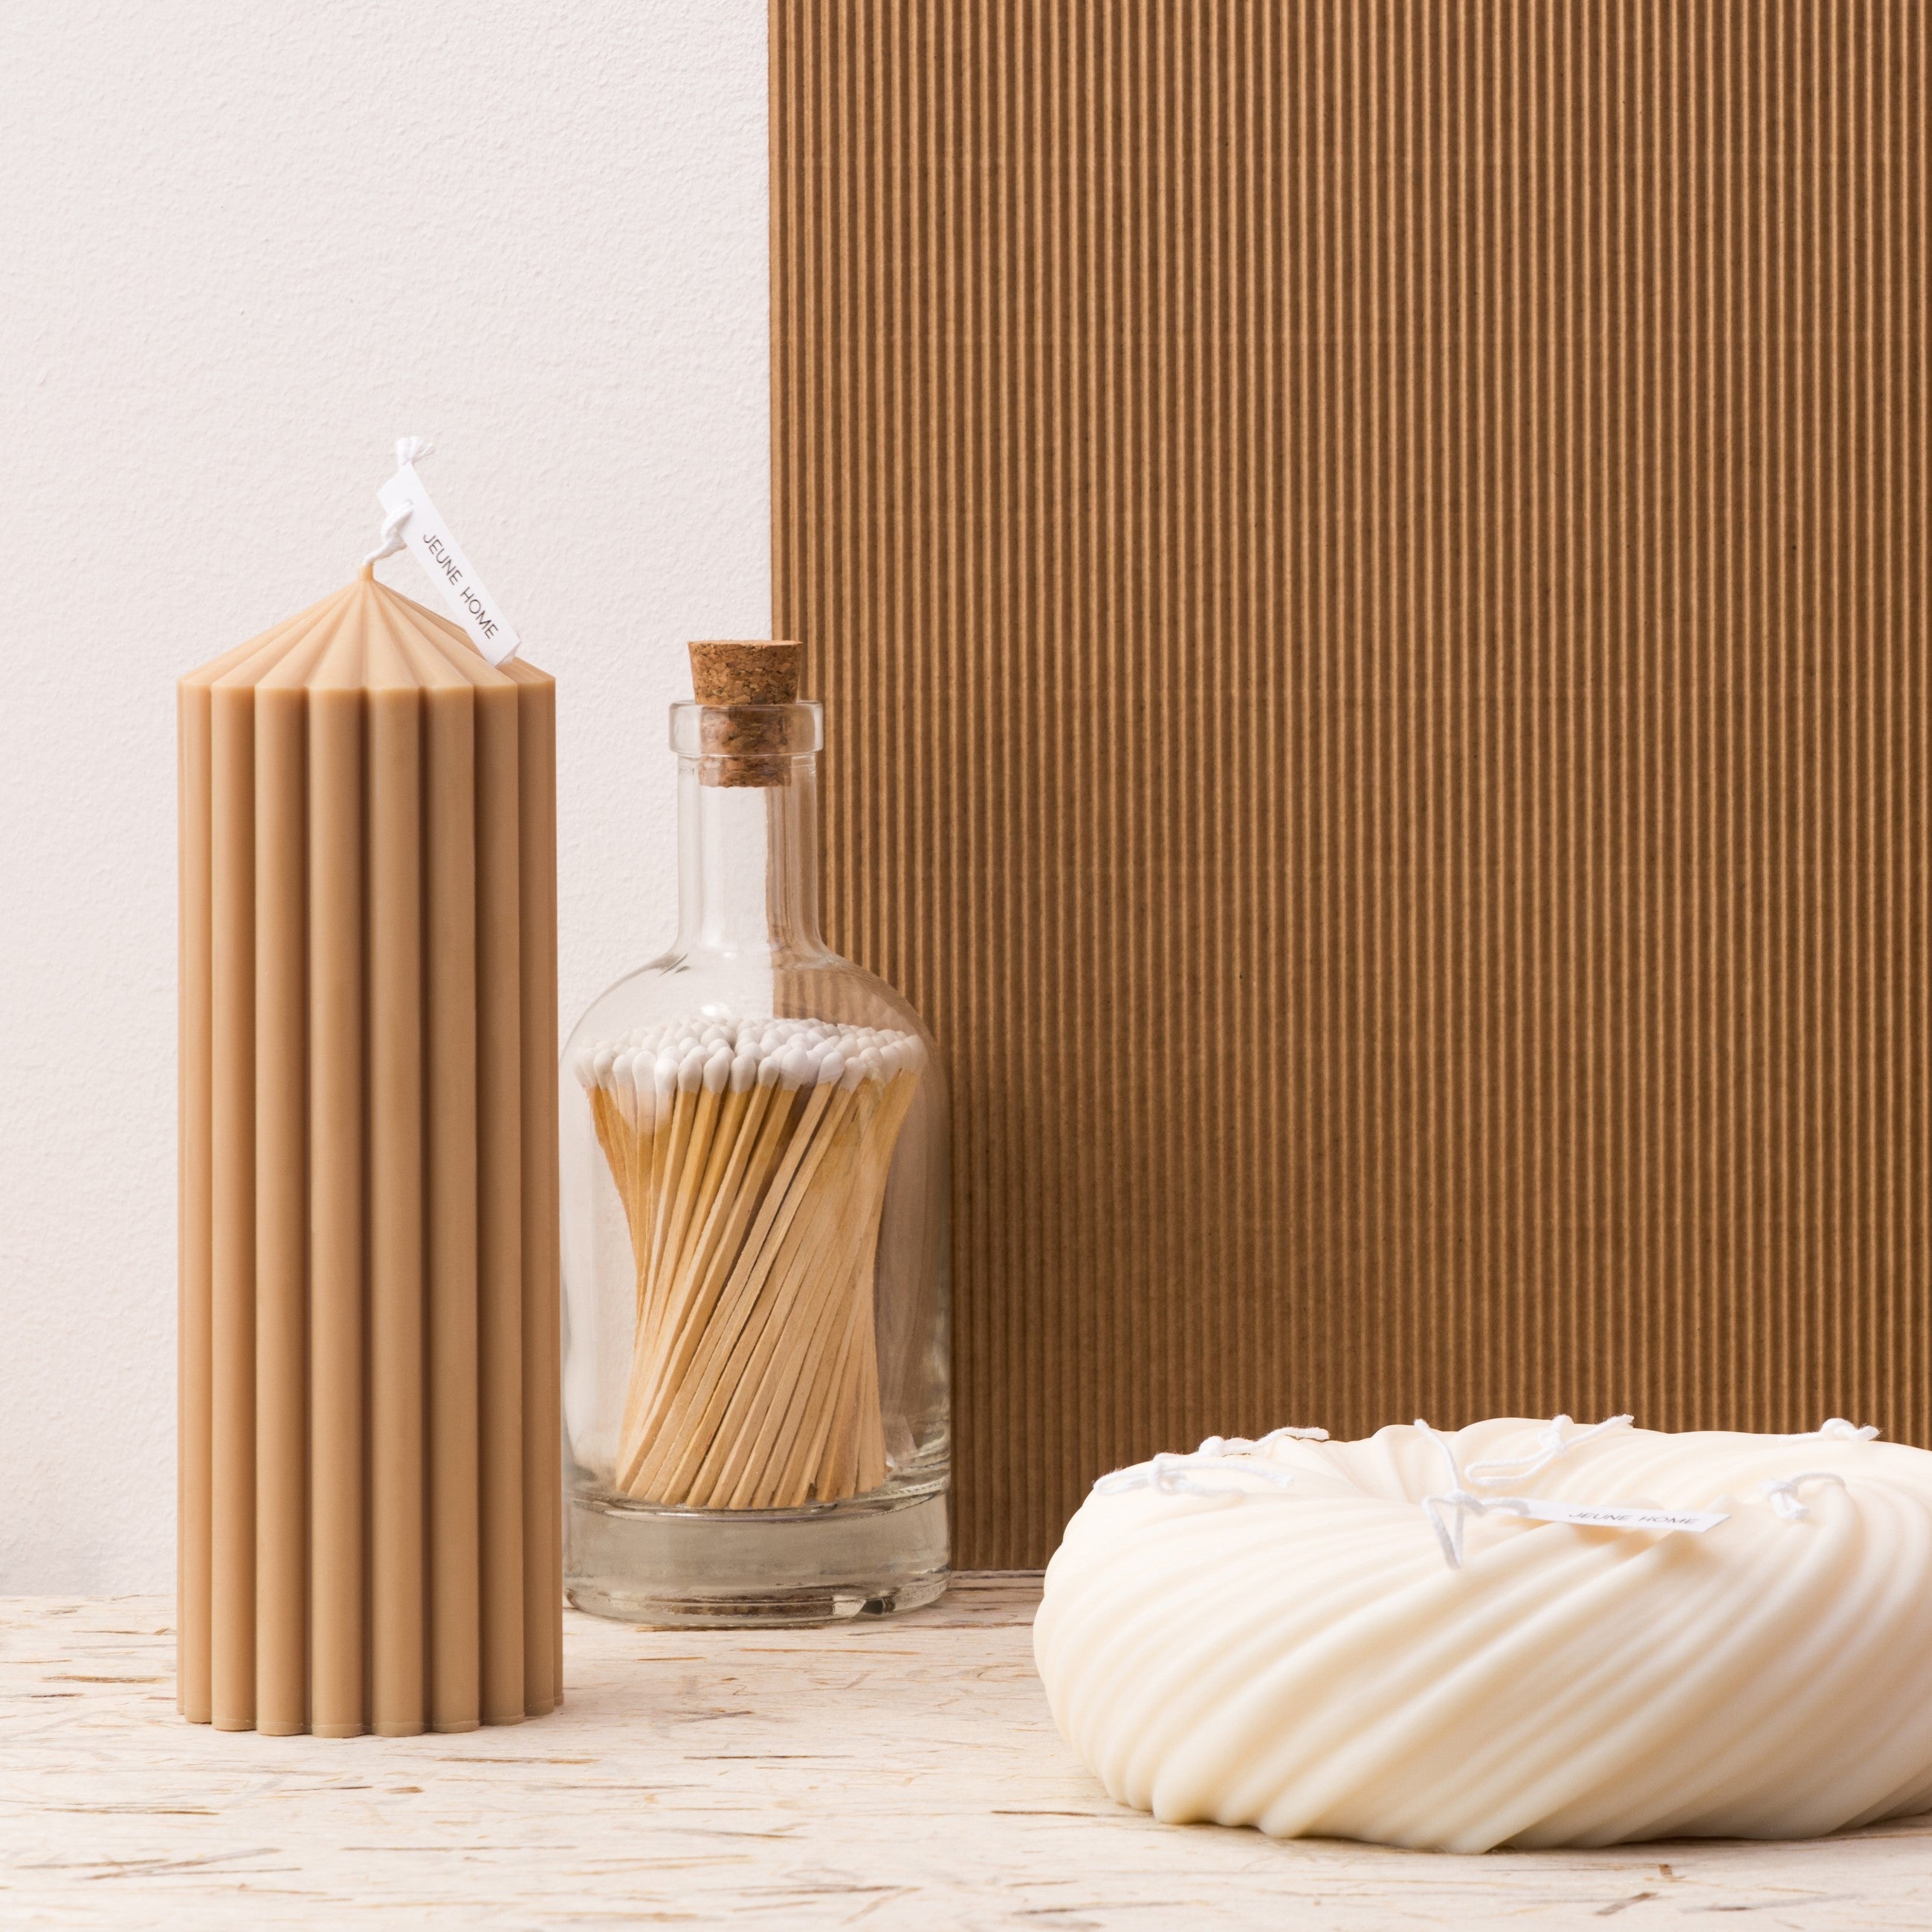 Herring & Bones - Concept Store Joyeux - Archivist Gallery - Allumettes - Bouteille d'allumettes "White Fern"